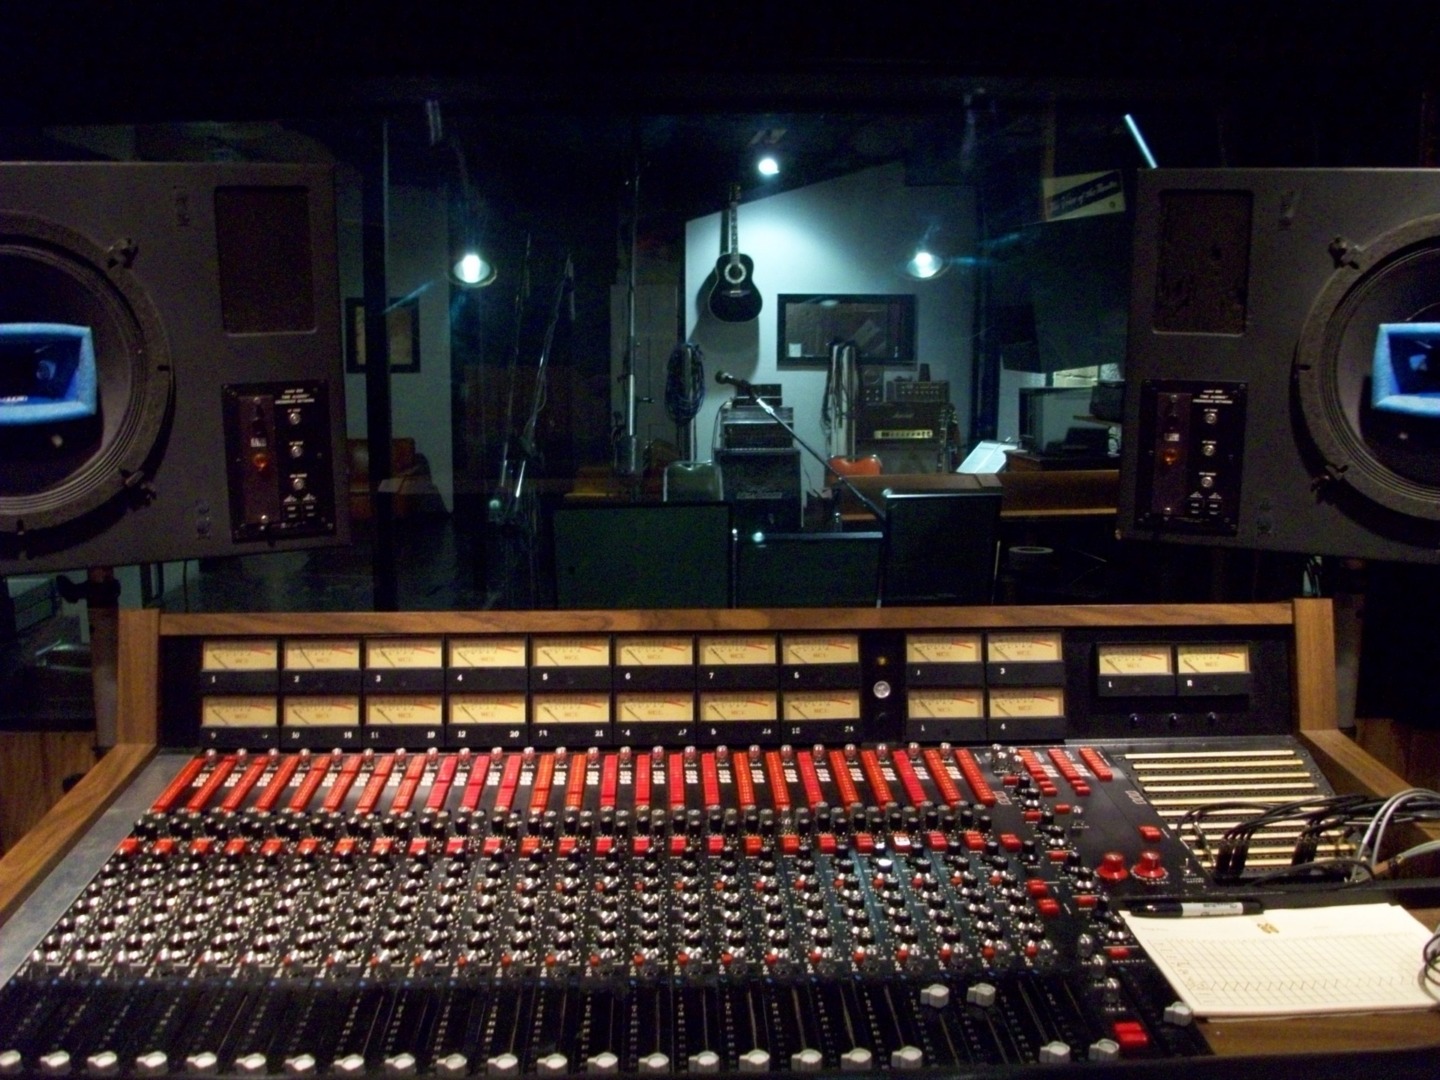 muscle shoals sound studio